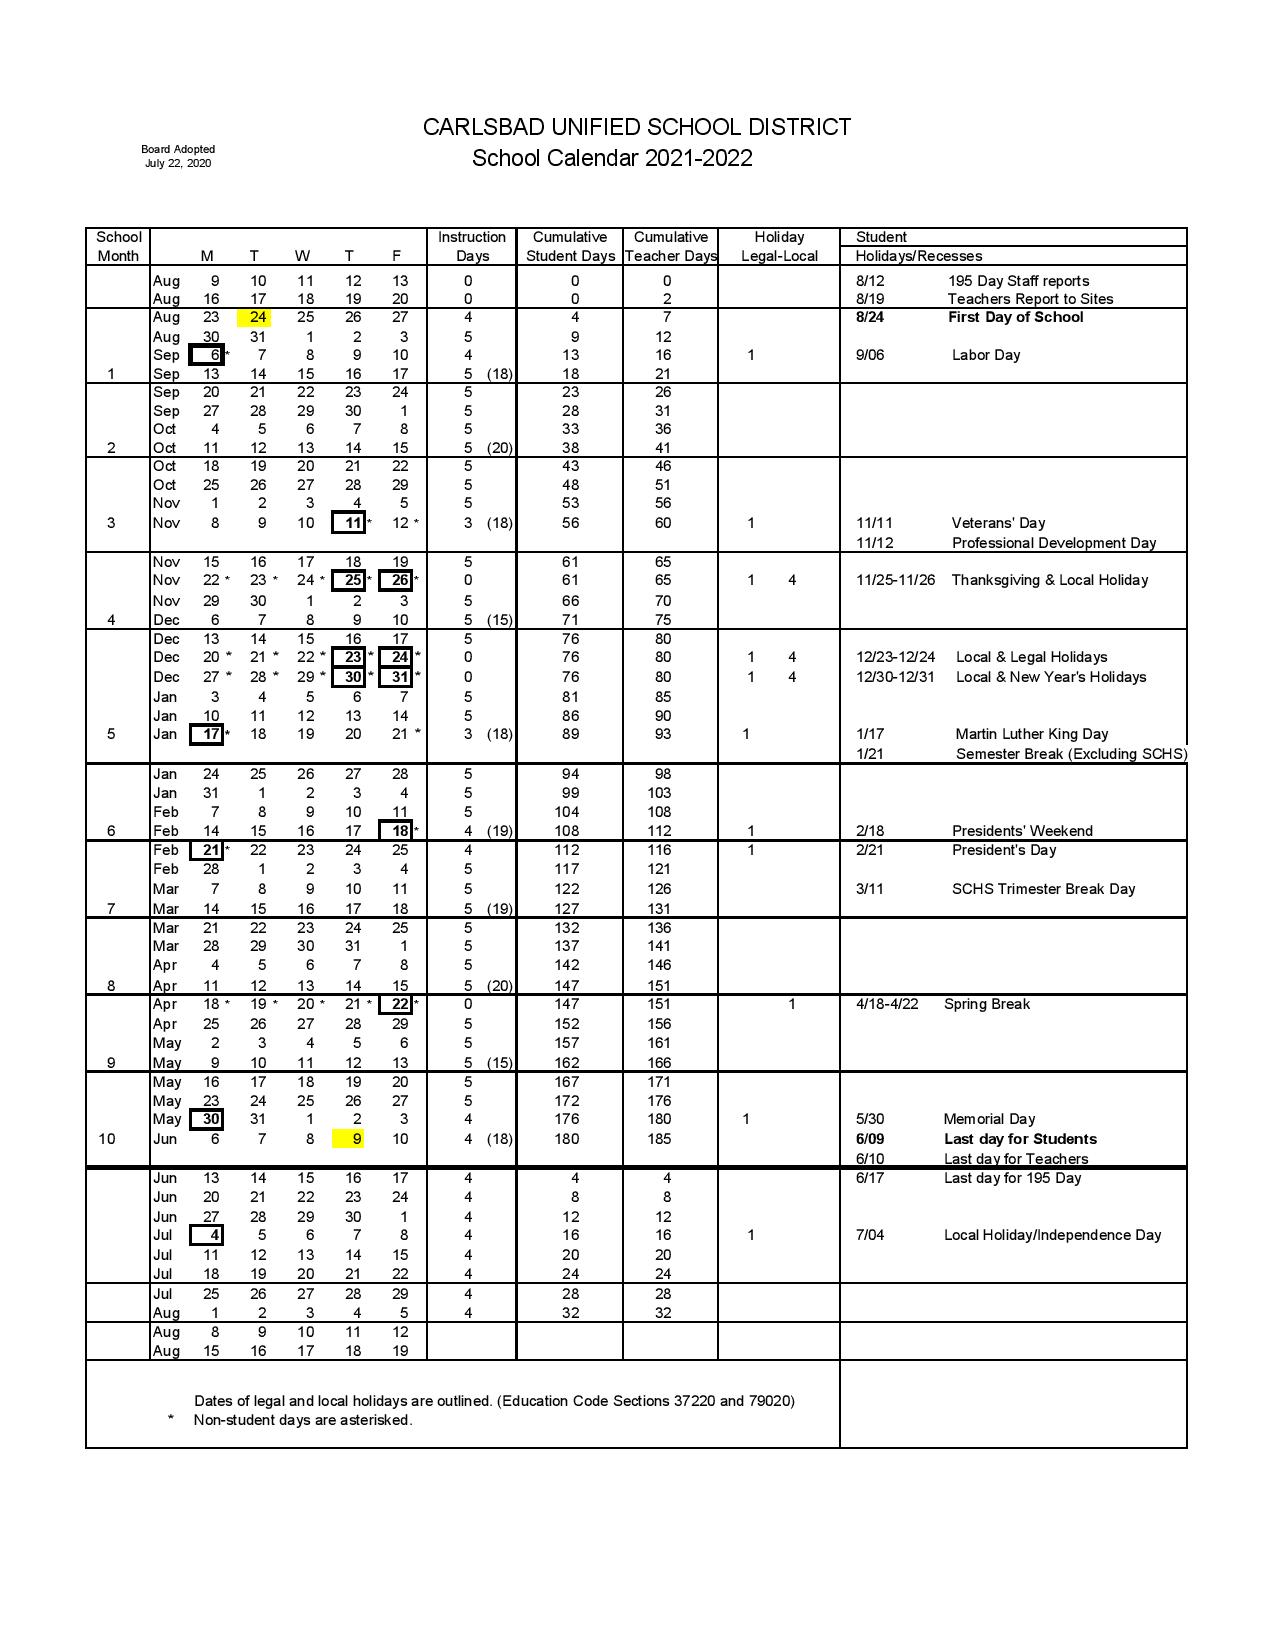 Carlsbad Unified School District Calendar 2021 2022